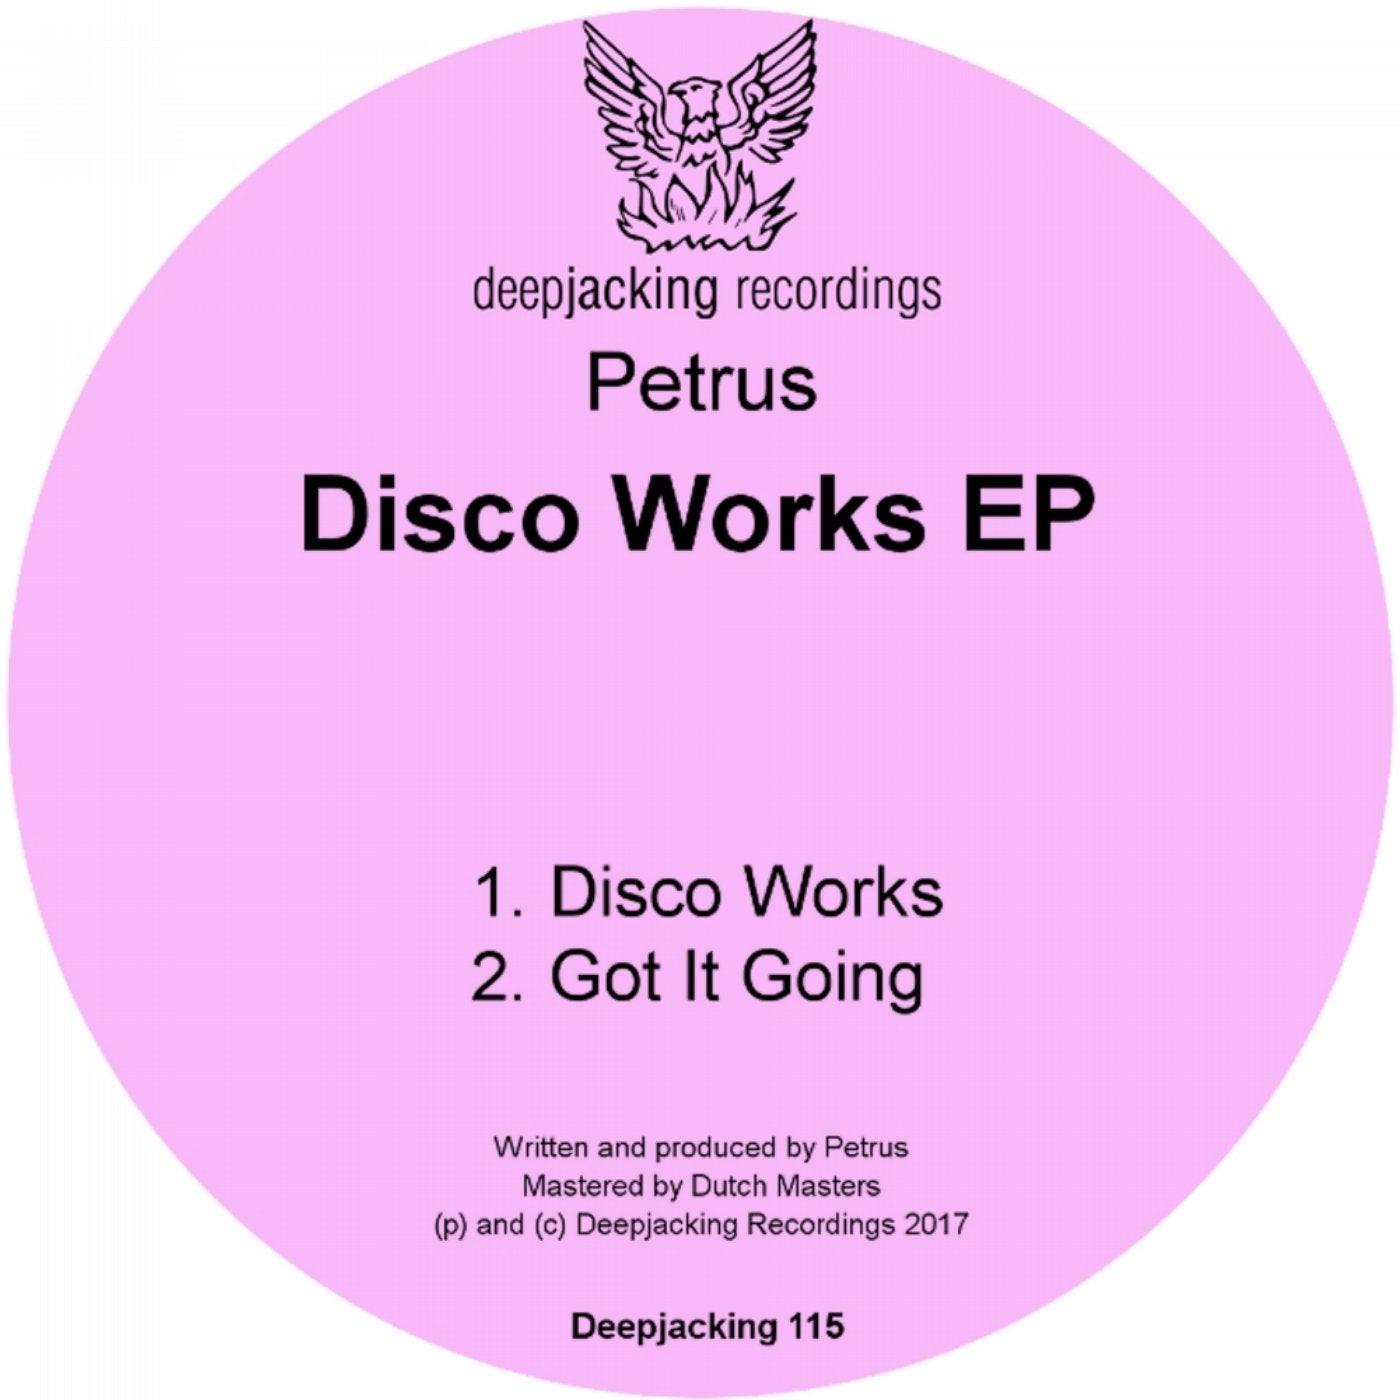 Disco Works EP